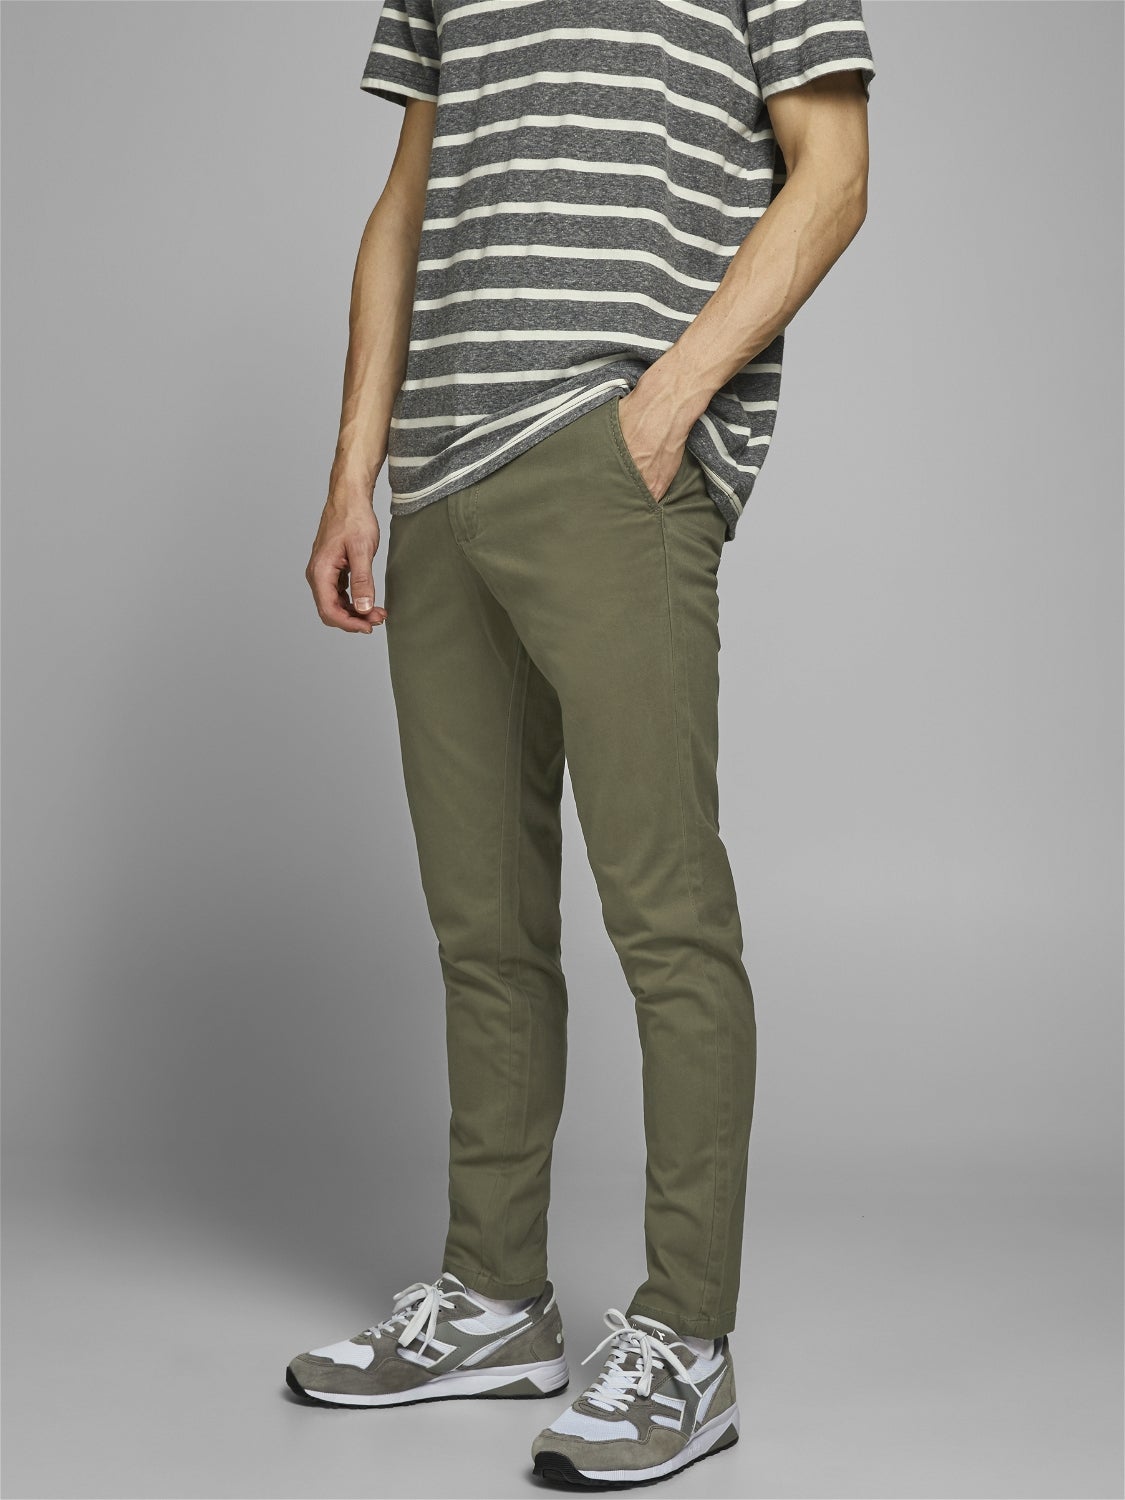 MEN FASHION Trousers Wide-leg Gray S discount 55% Jack & Jones slacks 